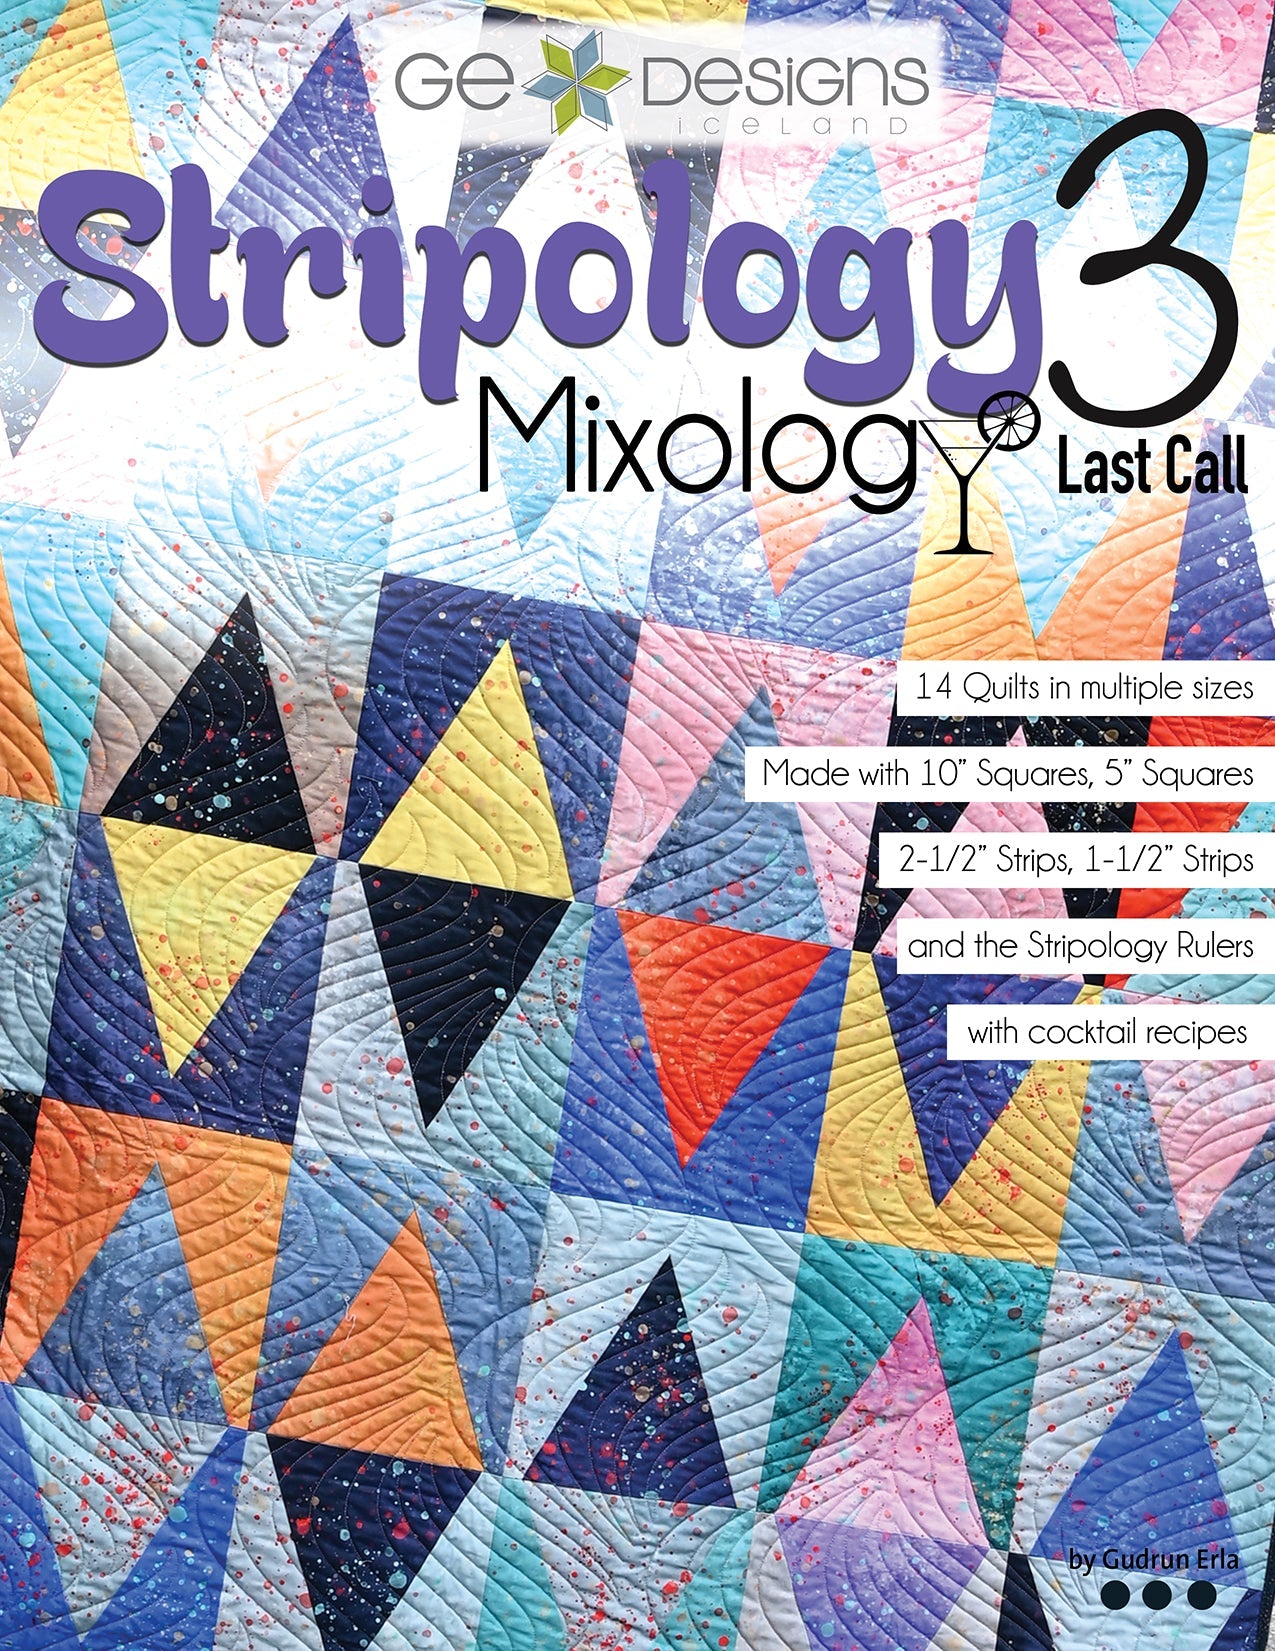 Stripology Mixology 3 book – GE Designs